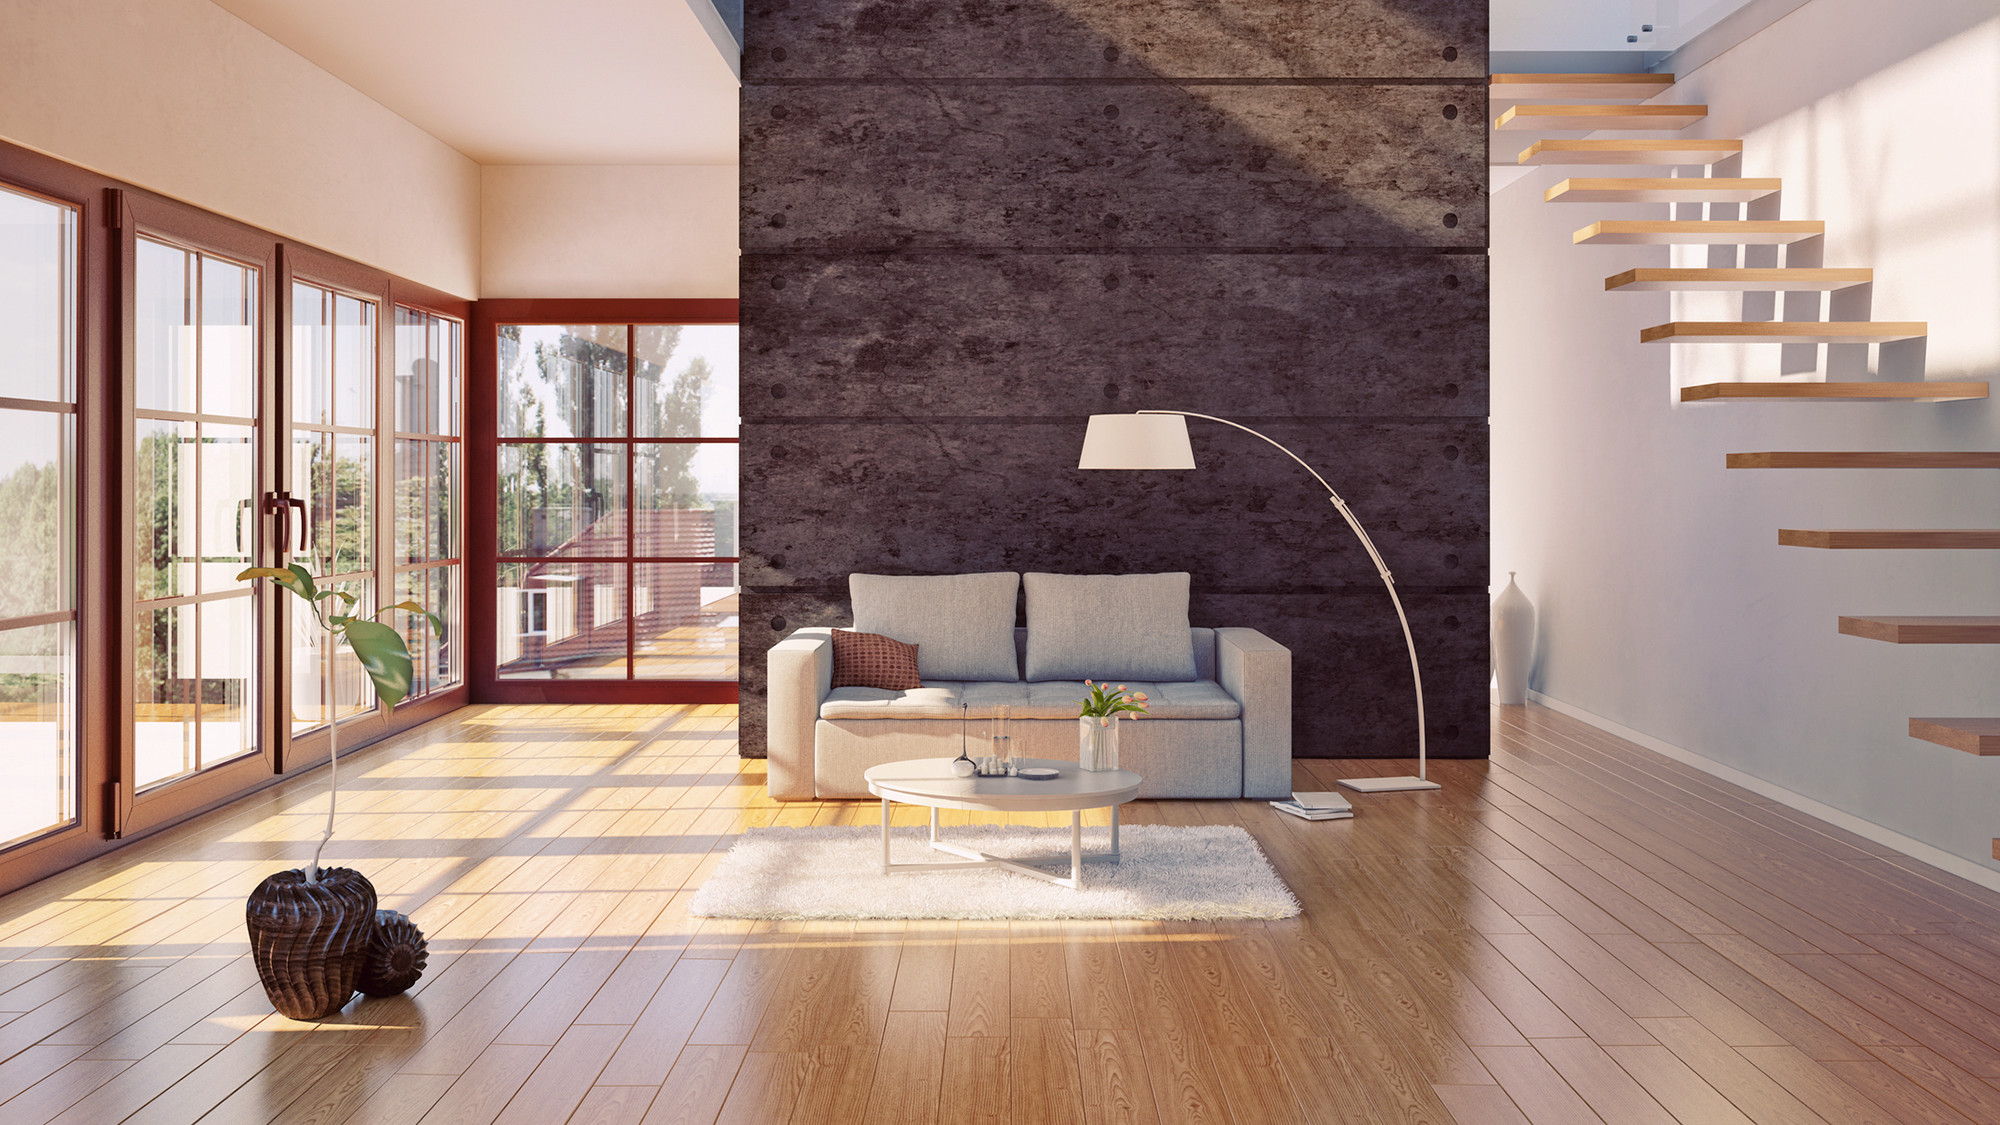 resurfacing prefinished hardwood floors of do hardwood floors provide the best return on investment realtor coma with hardwood floors investment